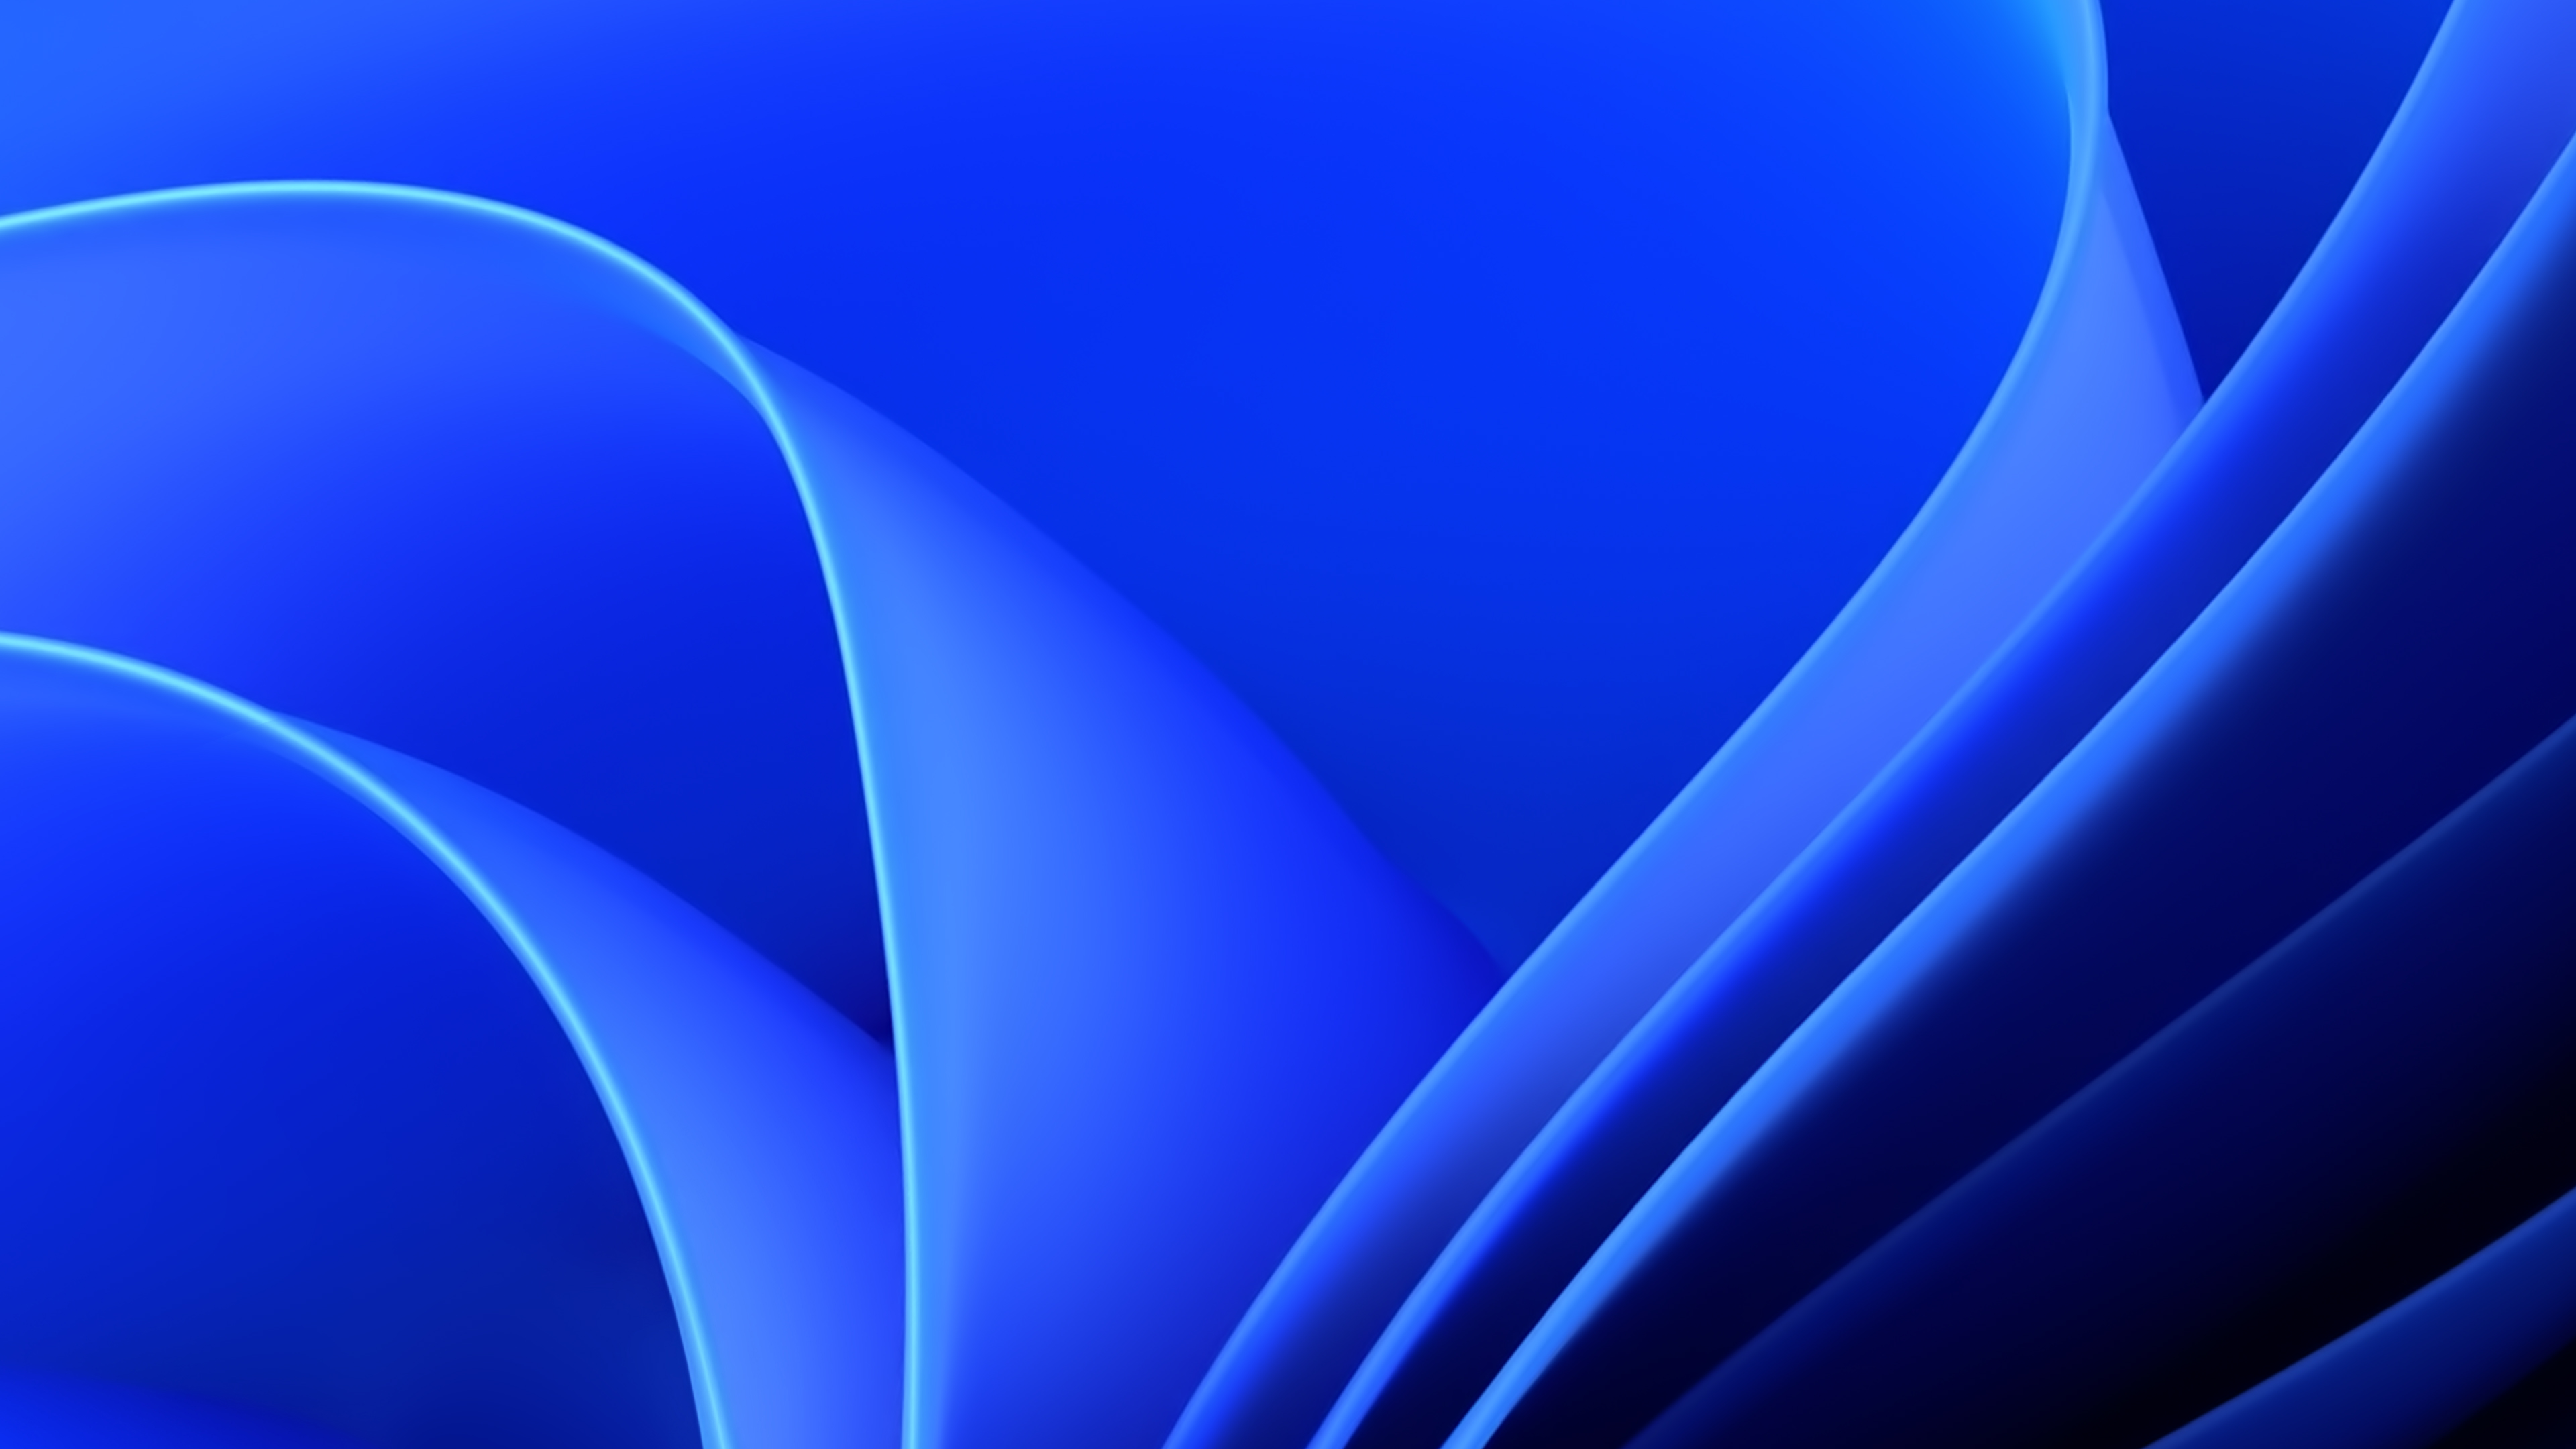  HD ویندوز 11 (Windows 11 HD Background) 